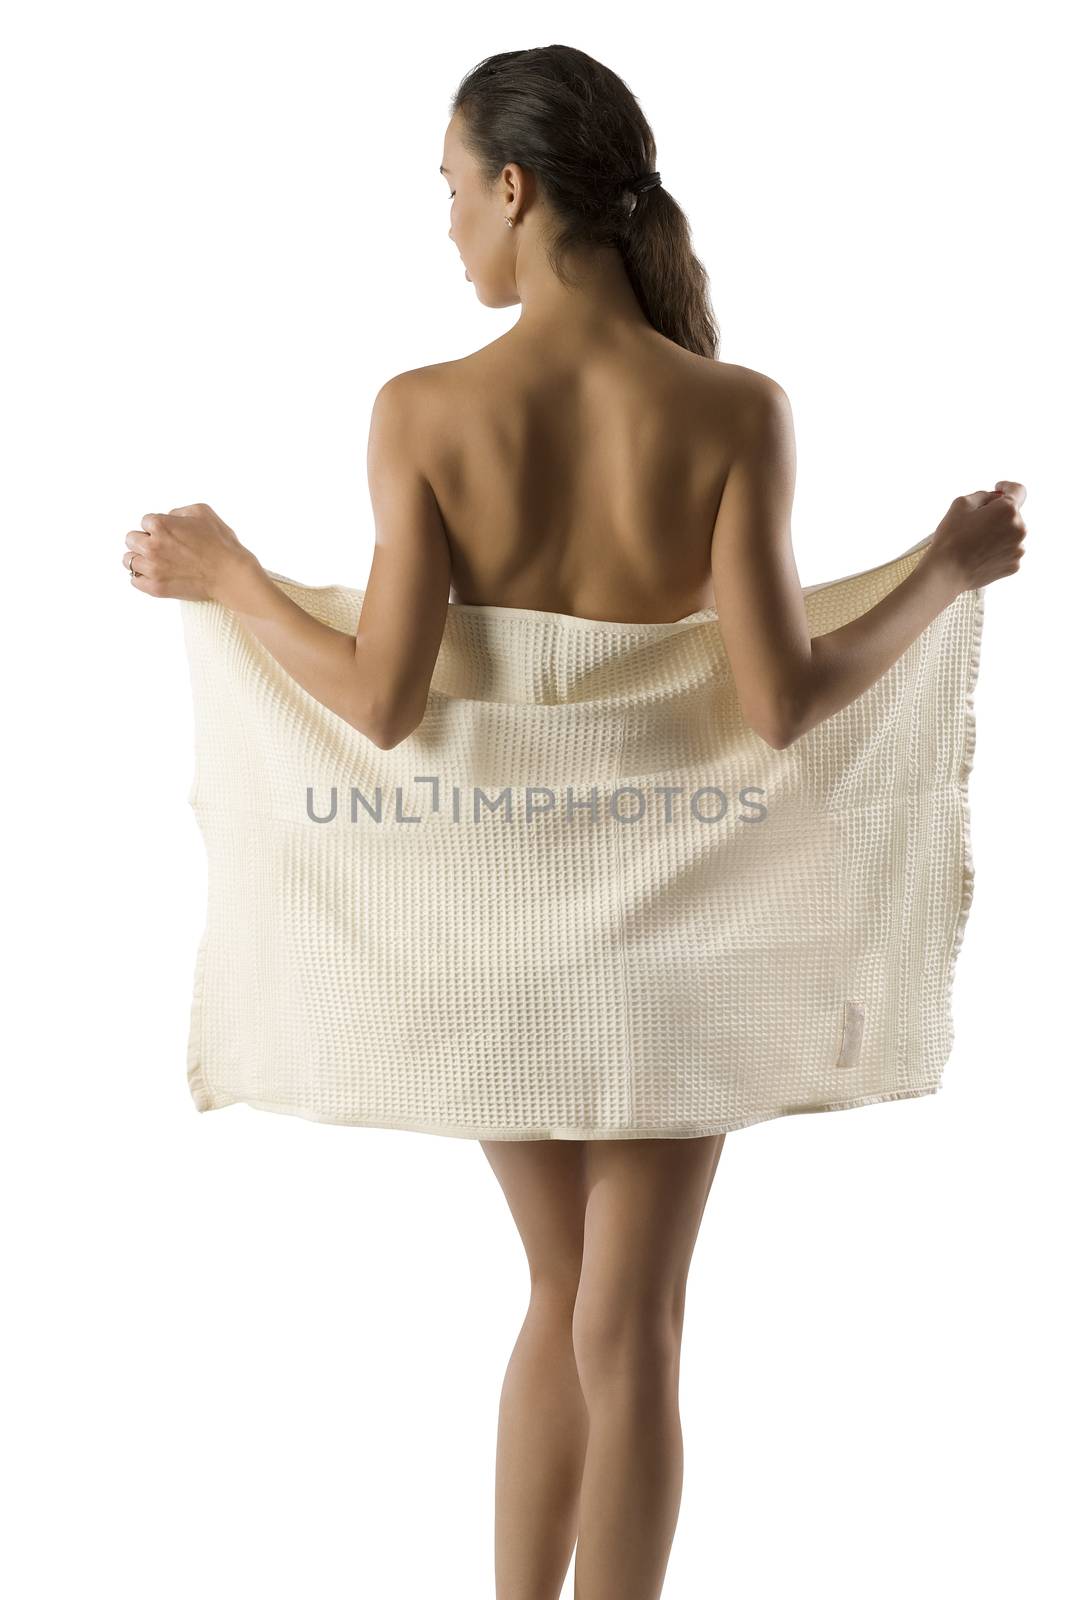 beauty girl taking off towel by fotoCD